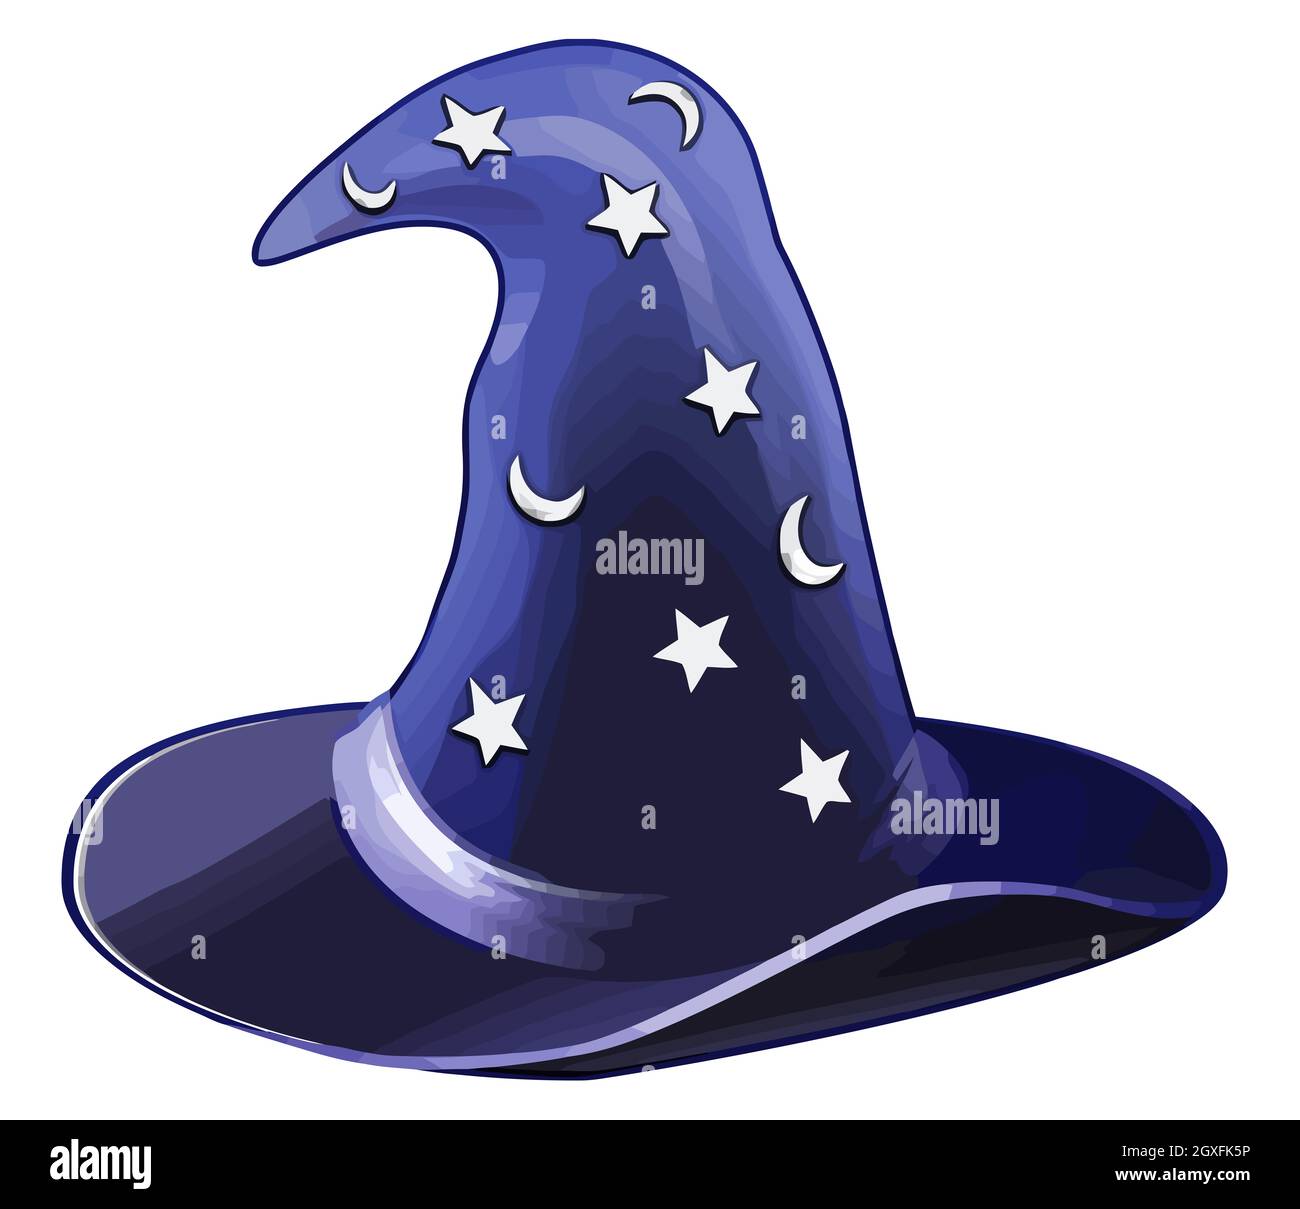 wizard hat costume magical fantasy illustration Stock Photo - Alamy